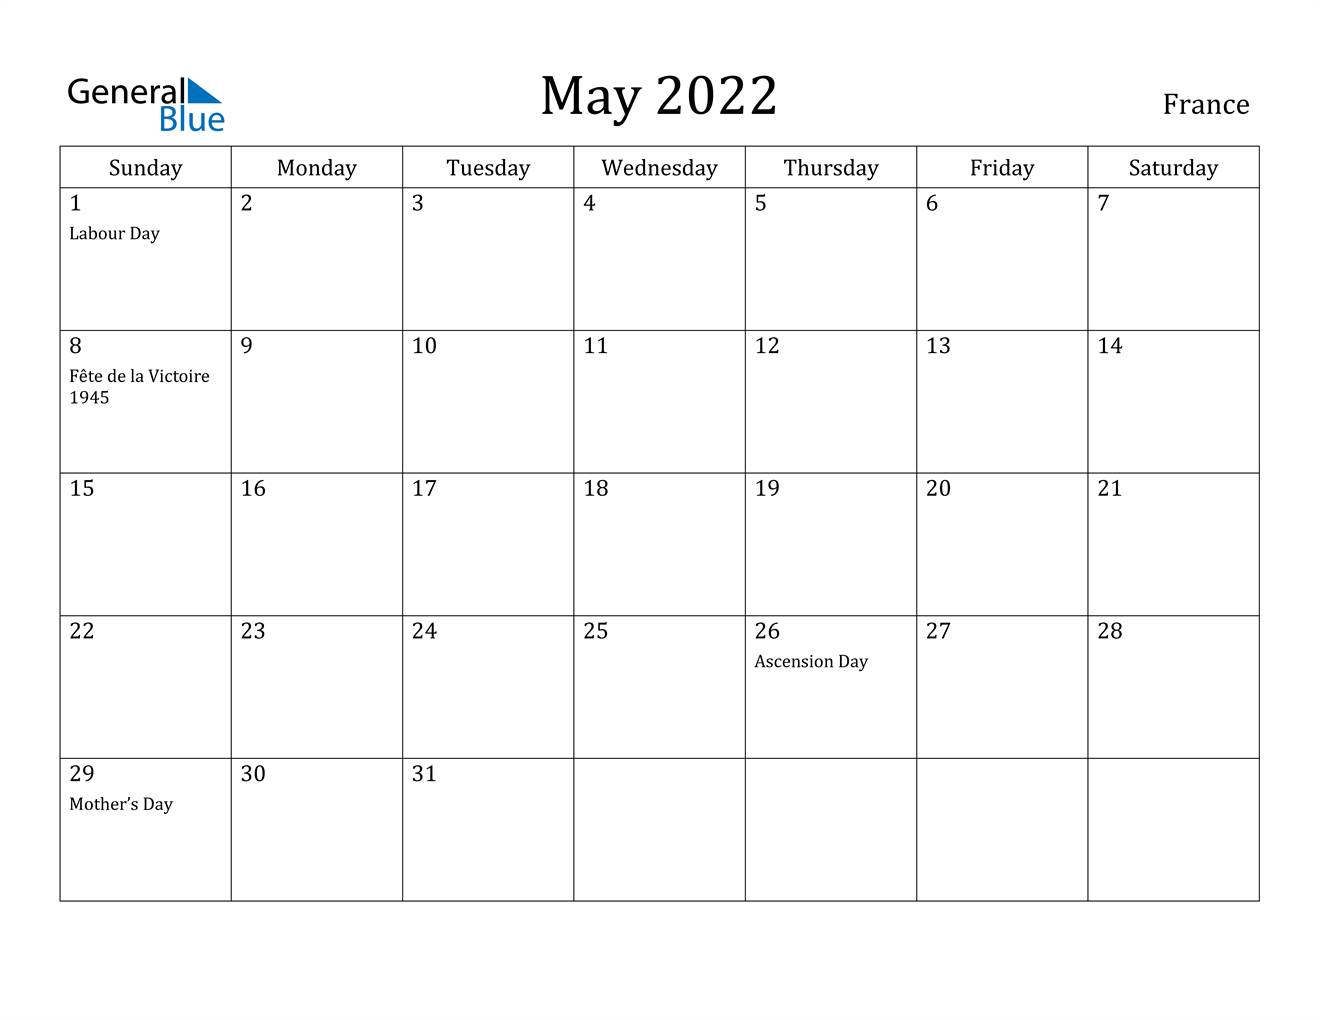 May 2022 Calendar - France